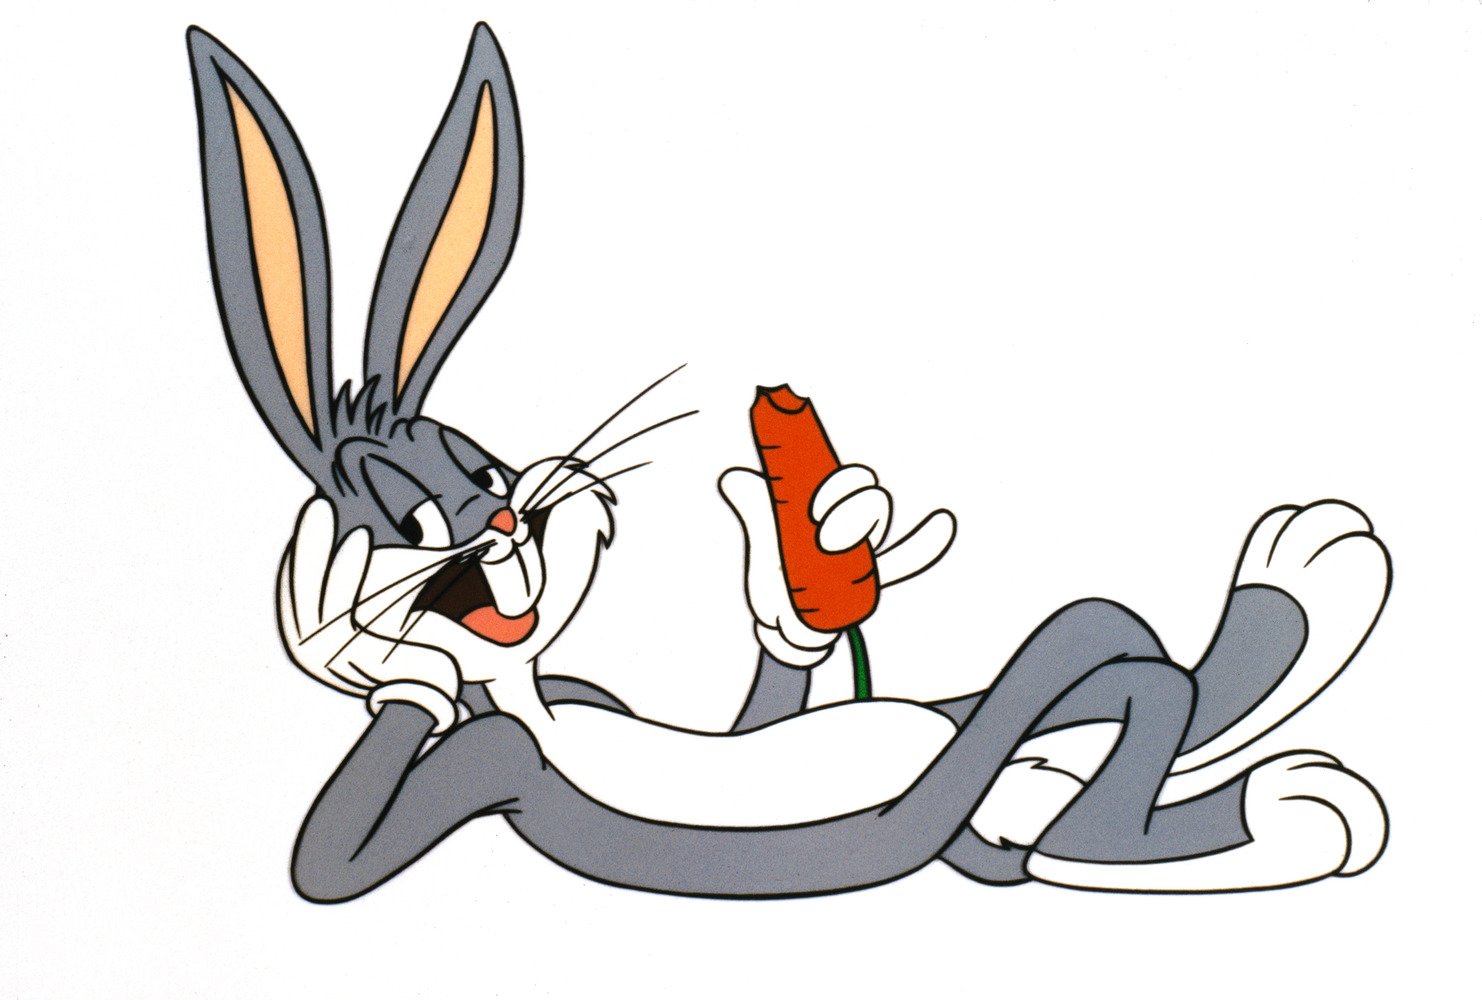 Bugs Bunny - Fictional Characters Wiki